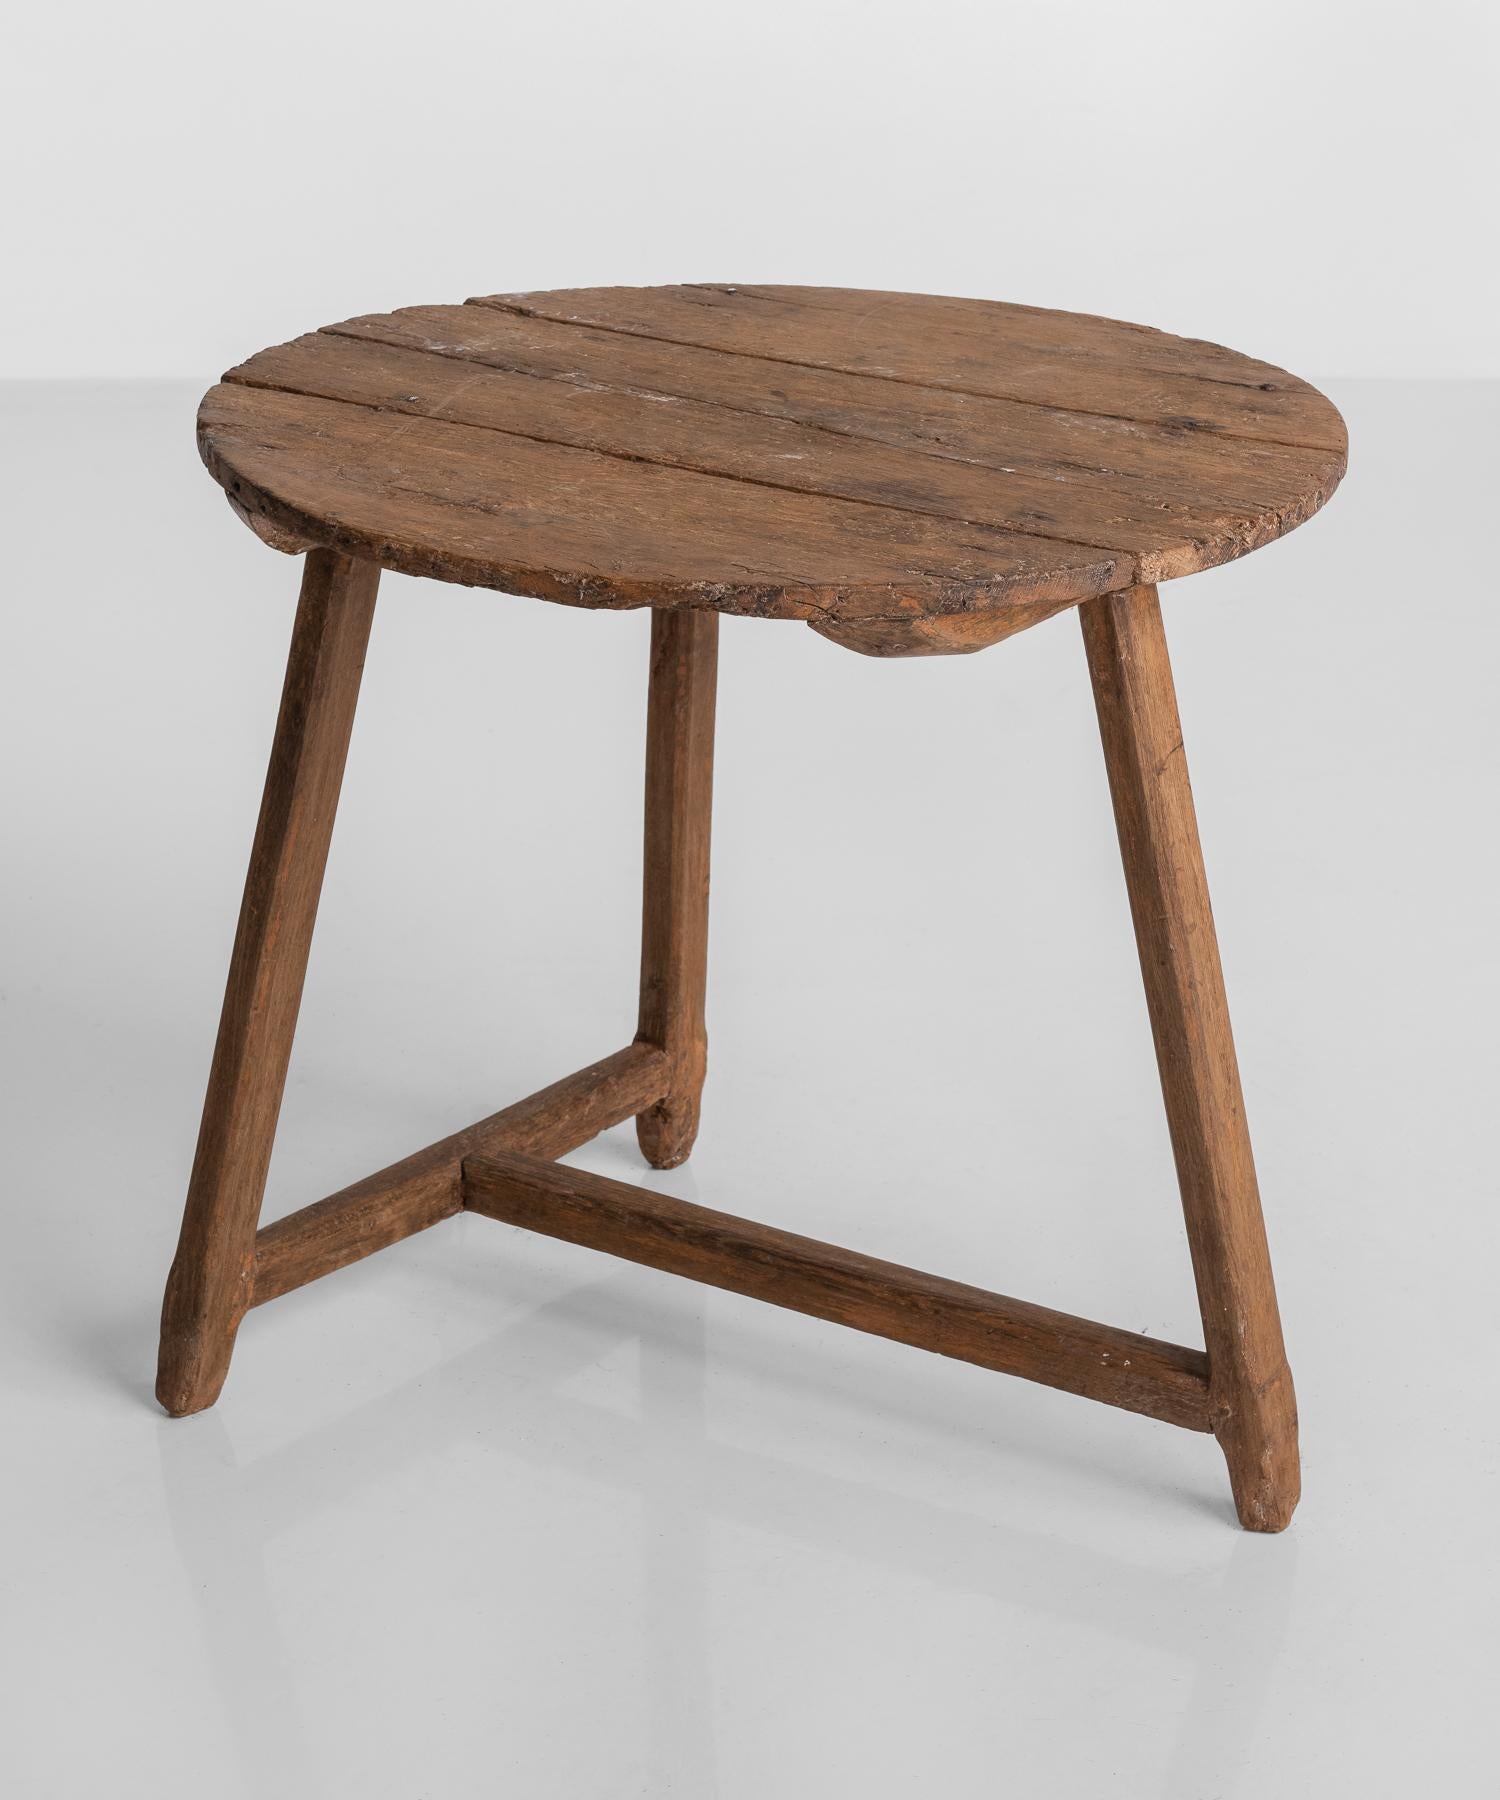 Primitive oak tripod table, made in England, circa 1920.

Unique form with beautiful patina.